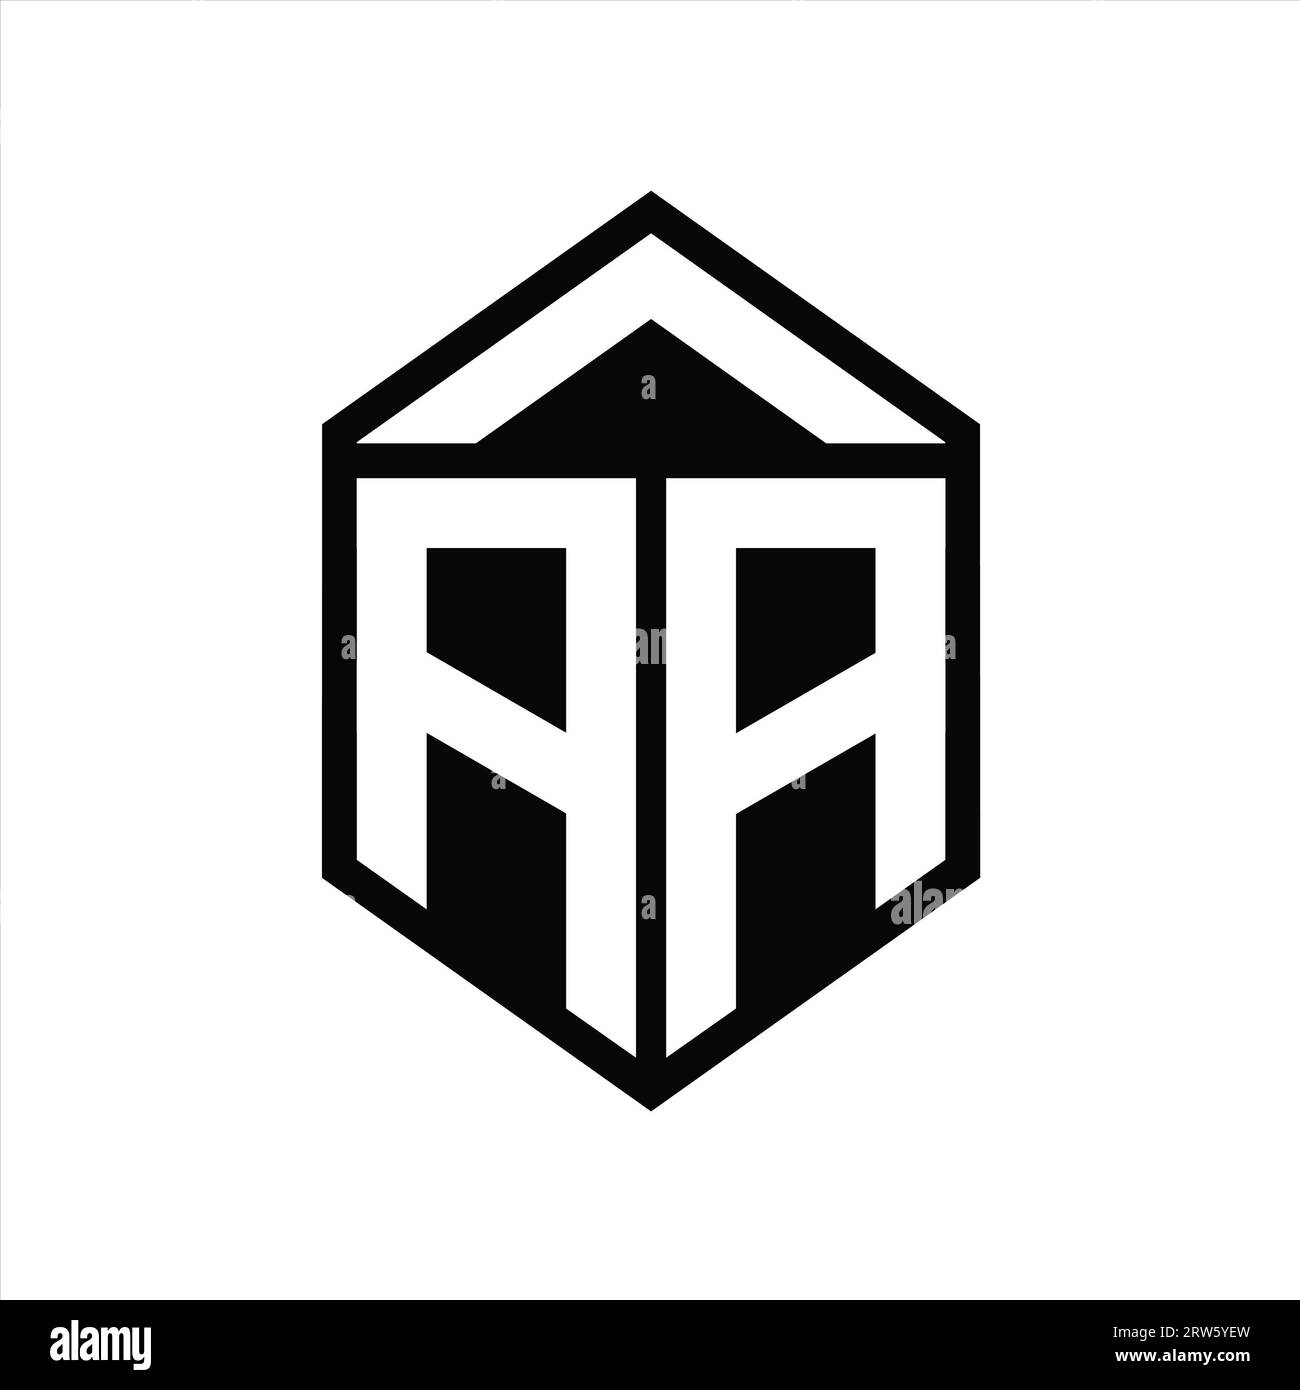 Aa logo monogram shield shape with crown design Vector Image